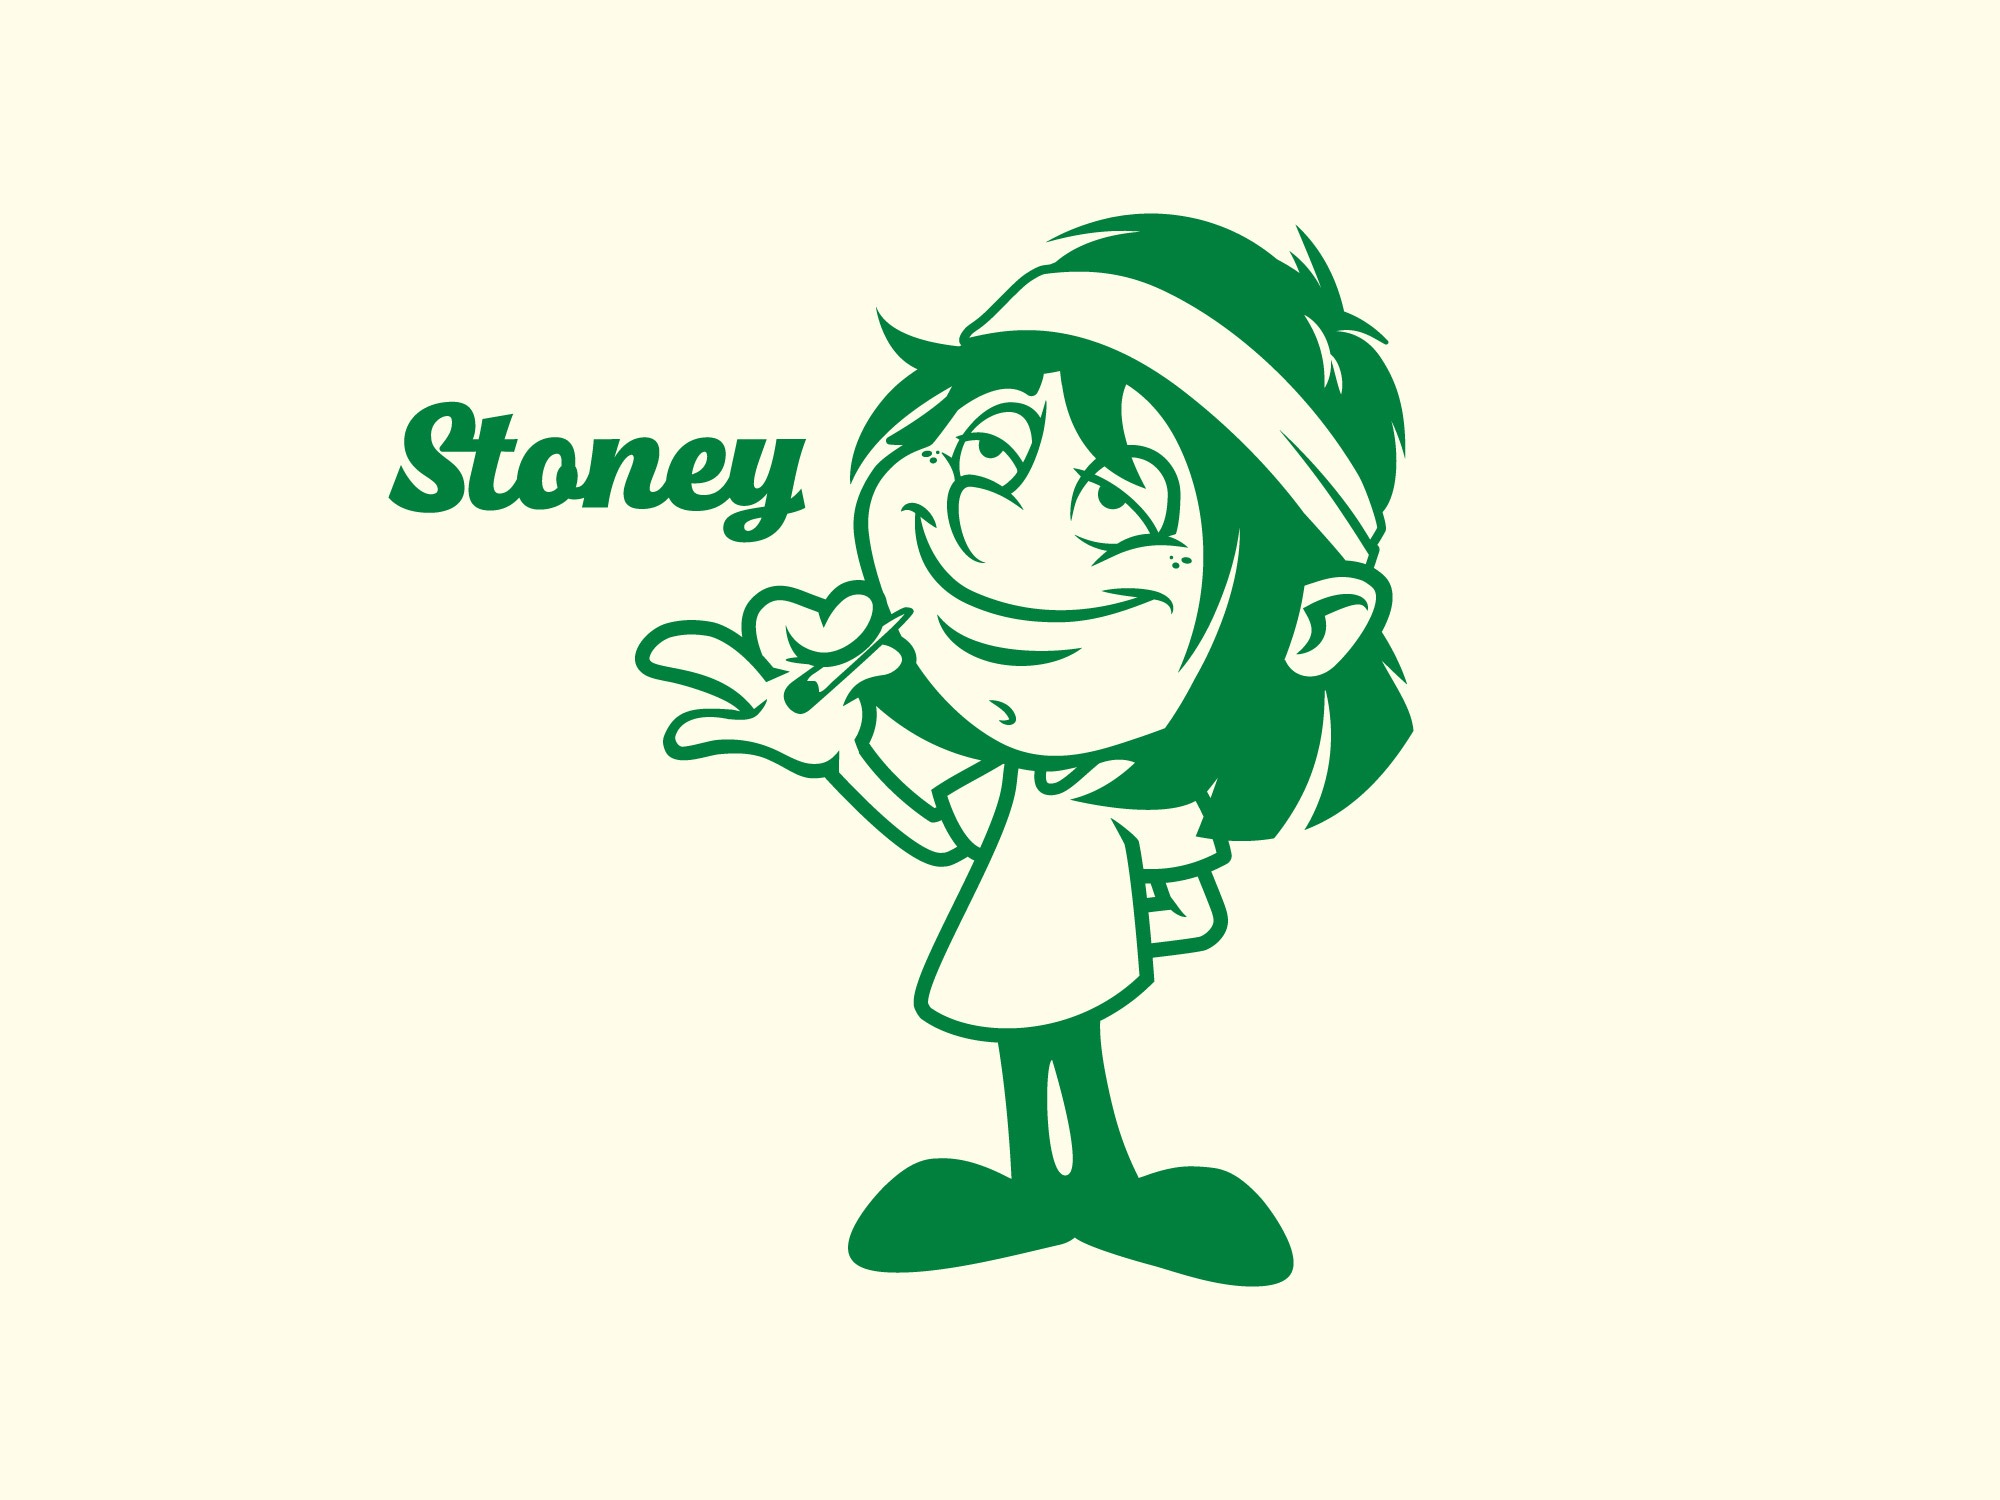 Stoney the mascot